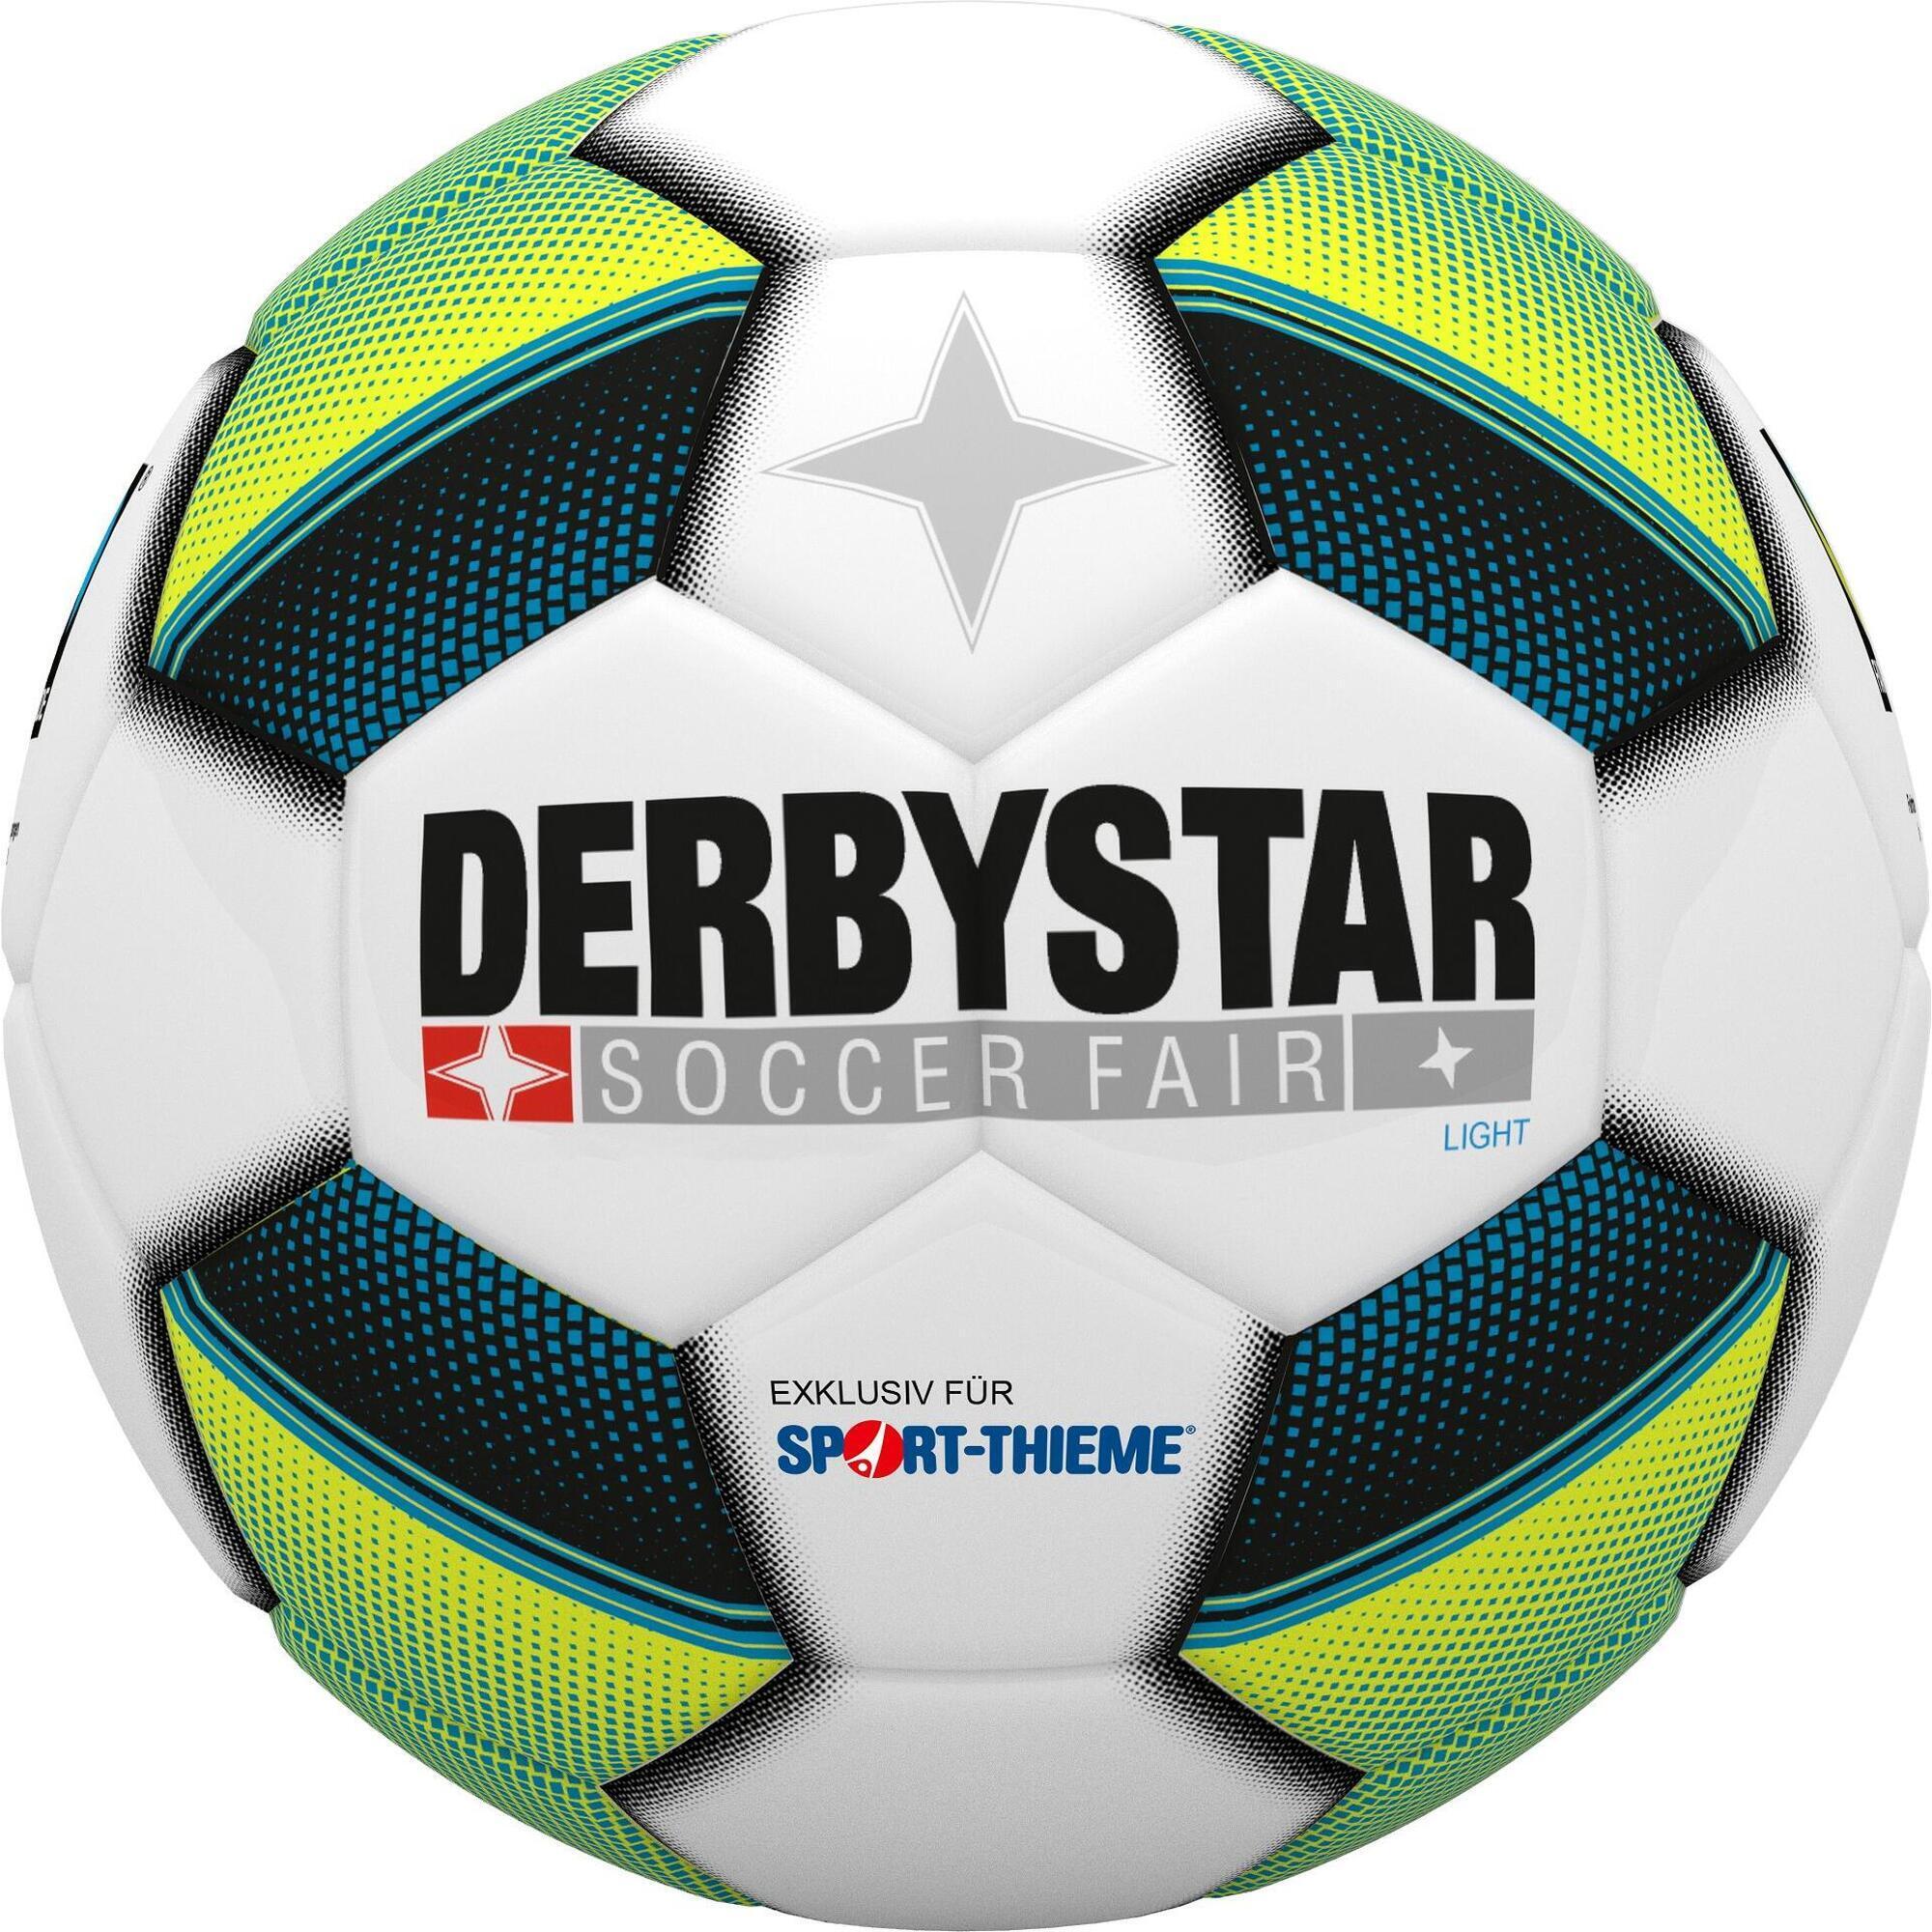 Derbystar Football Футбольная ярмарка Light, красочный